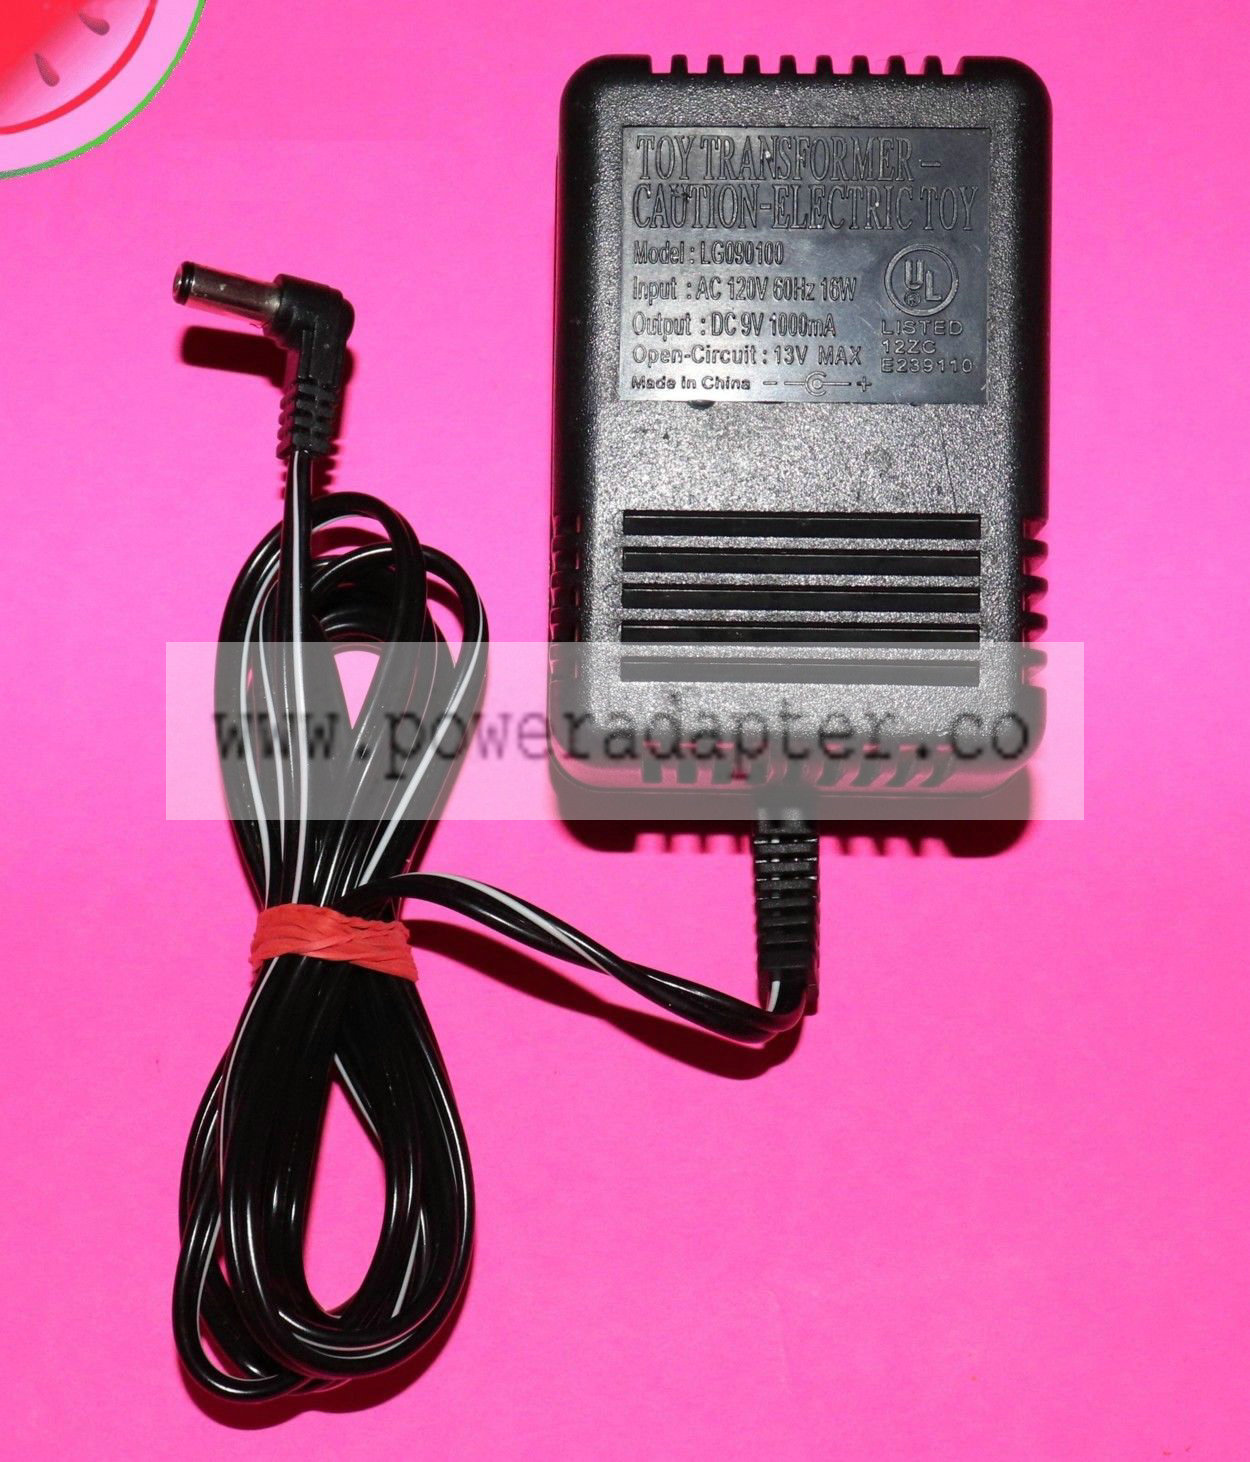 Power Supply Adapter TOY TRANSFORMER LG090100 AC/ DC 9v 1000mA 1amp LYGO Bundle Listing: No Brand: LYGO Type: AC to